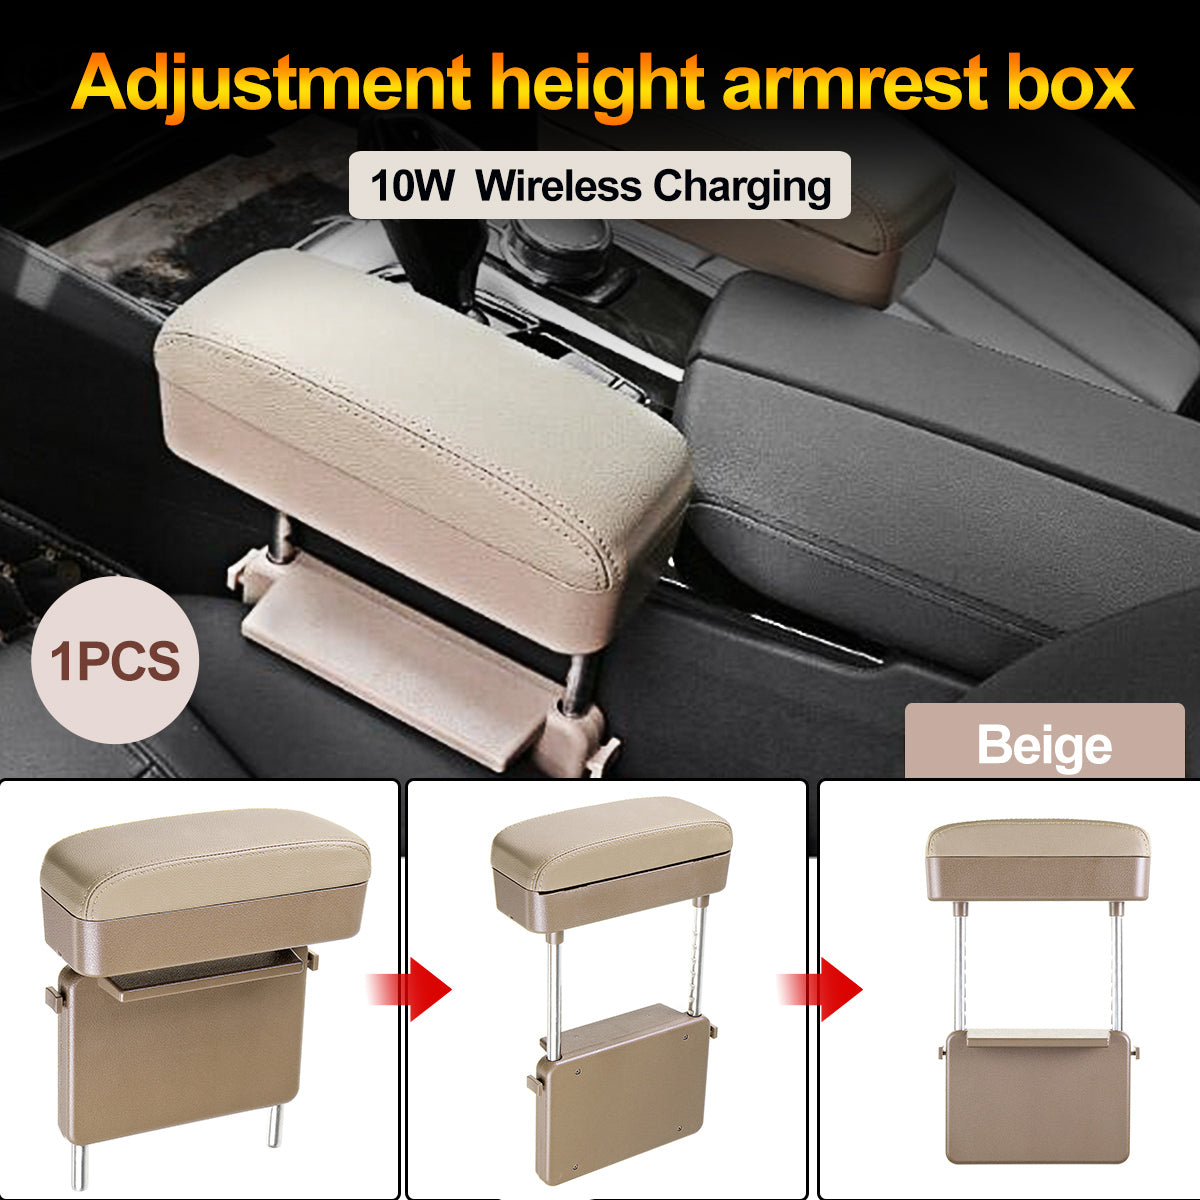 10W Wireless Charger Armrest Storage Box Support Bracket Adjustment Height Box - Auto GoShop